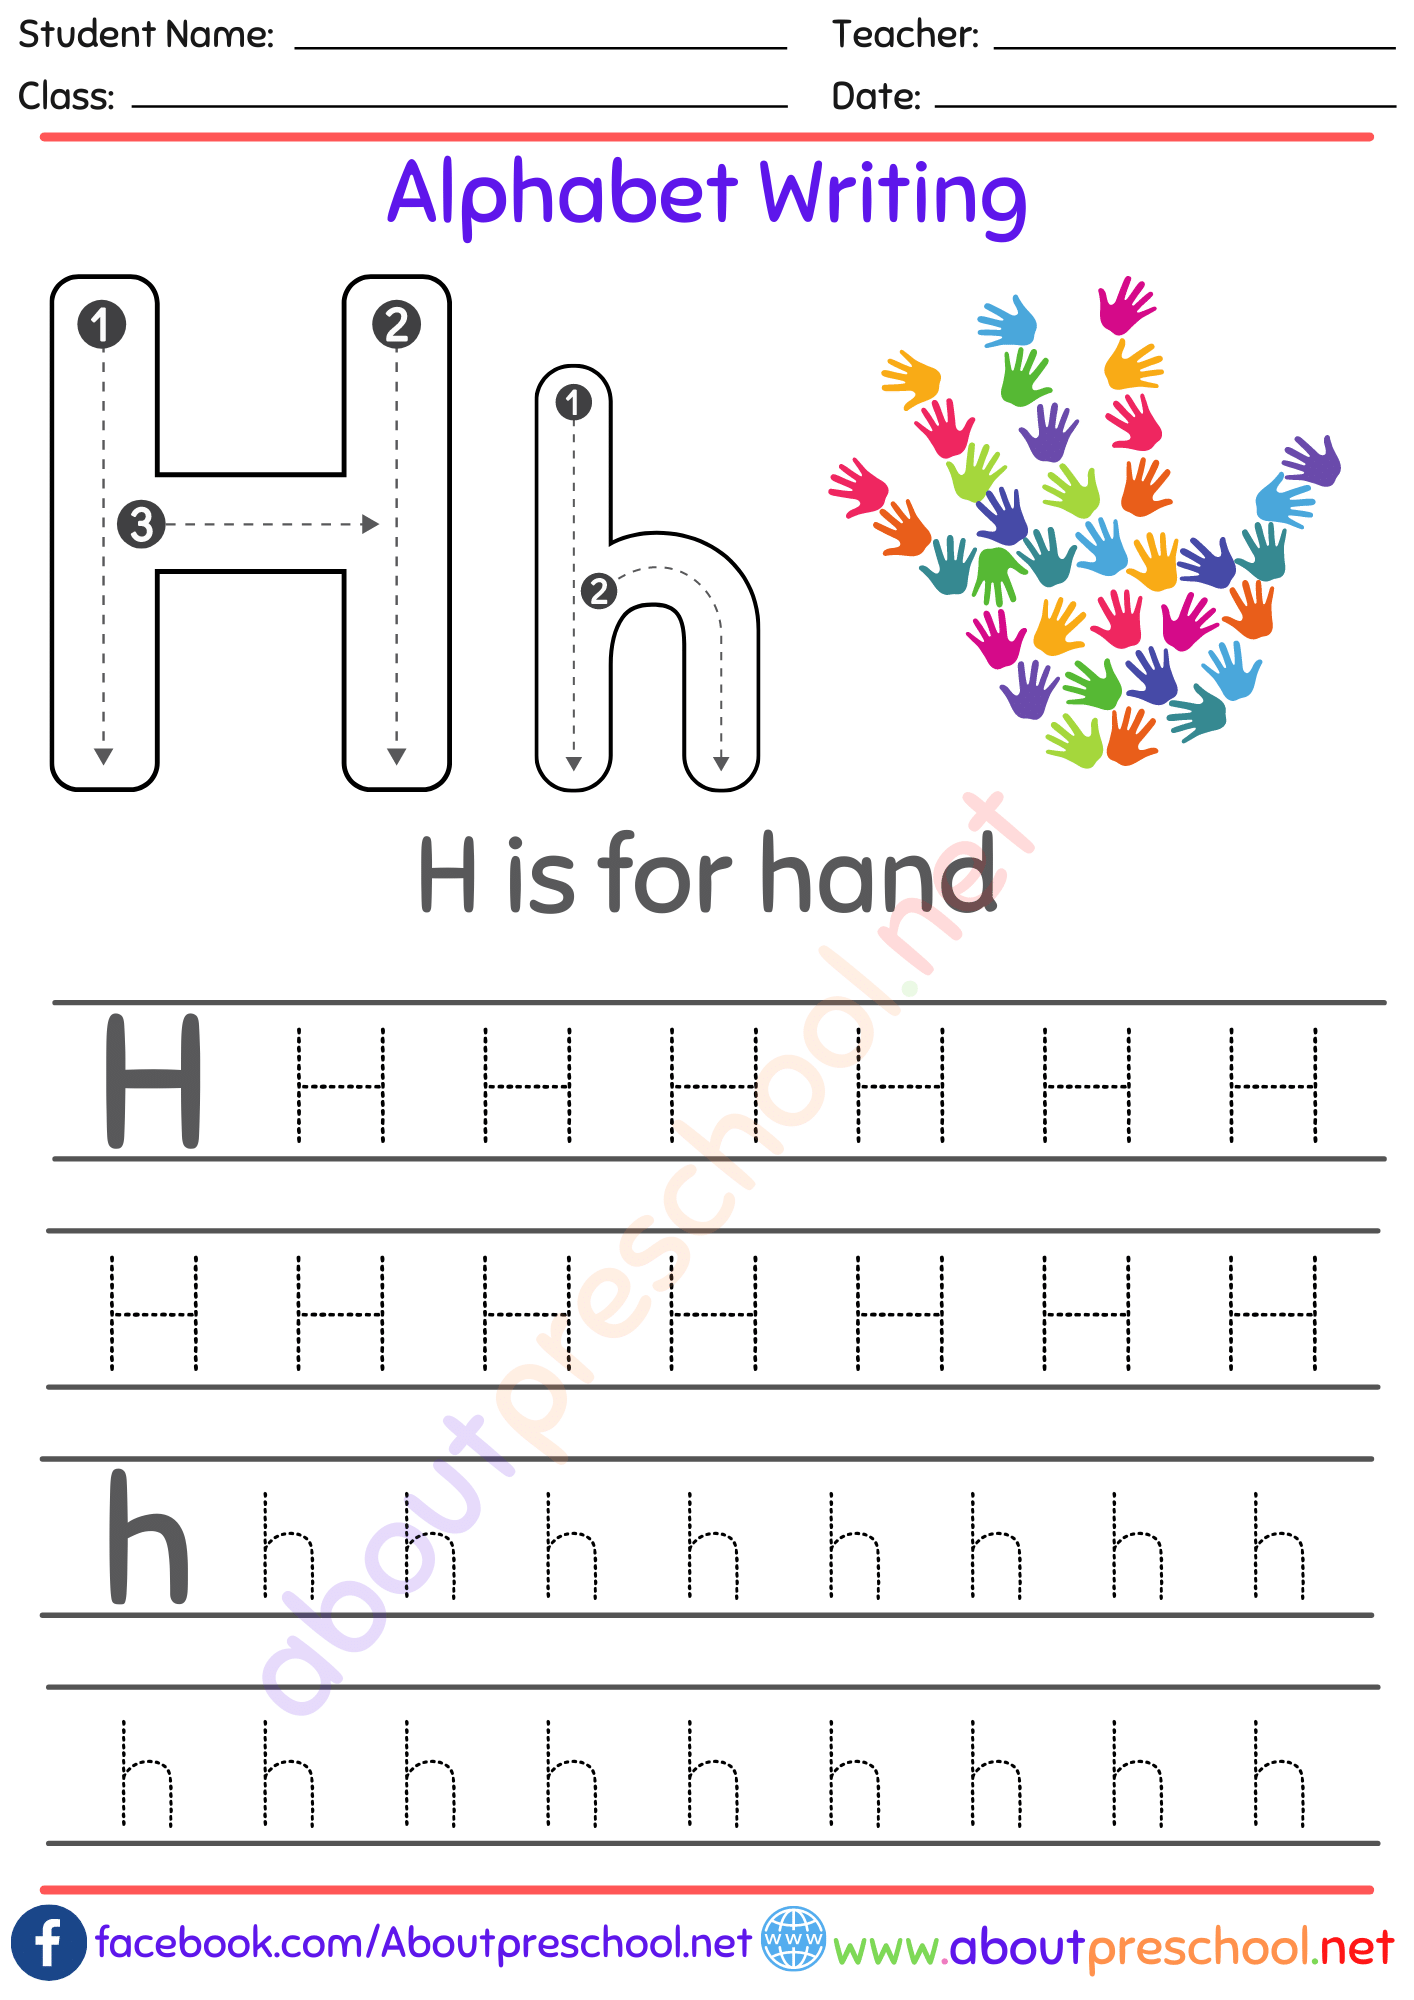 Alphabet Writing Worksheet h